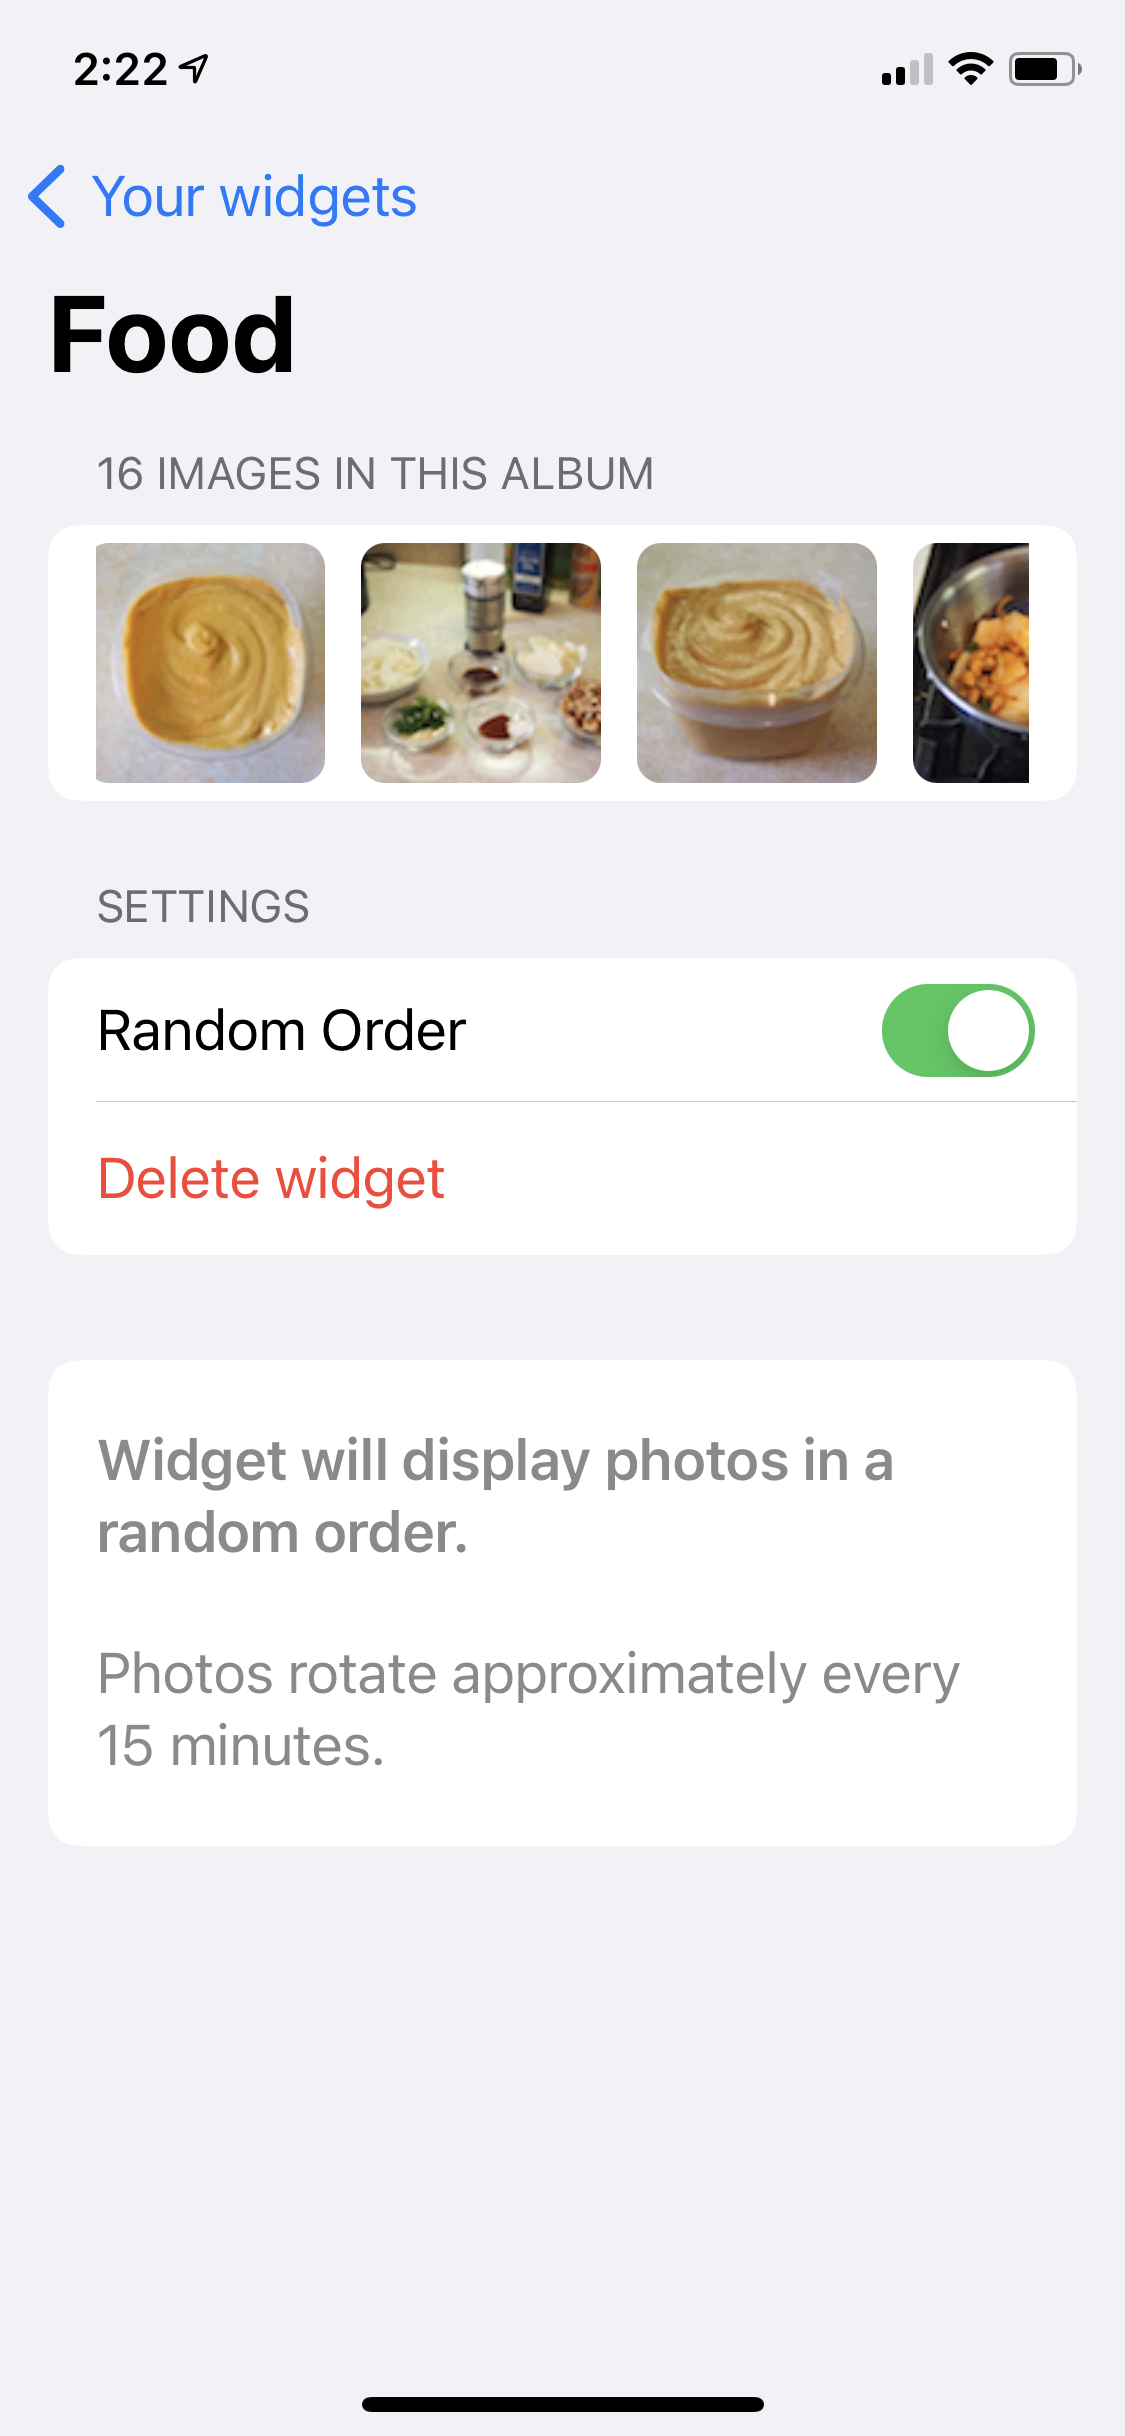 Image of widget settings with random order enabled